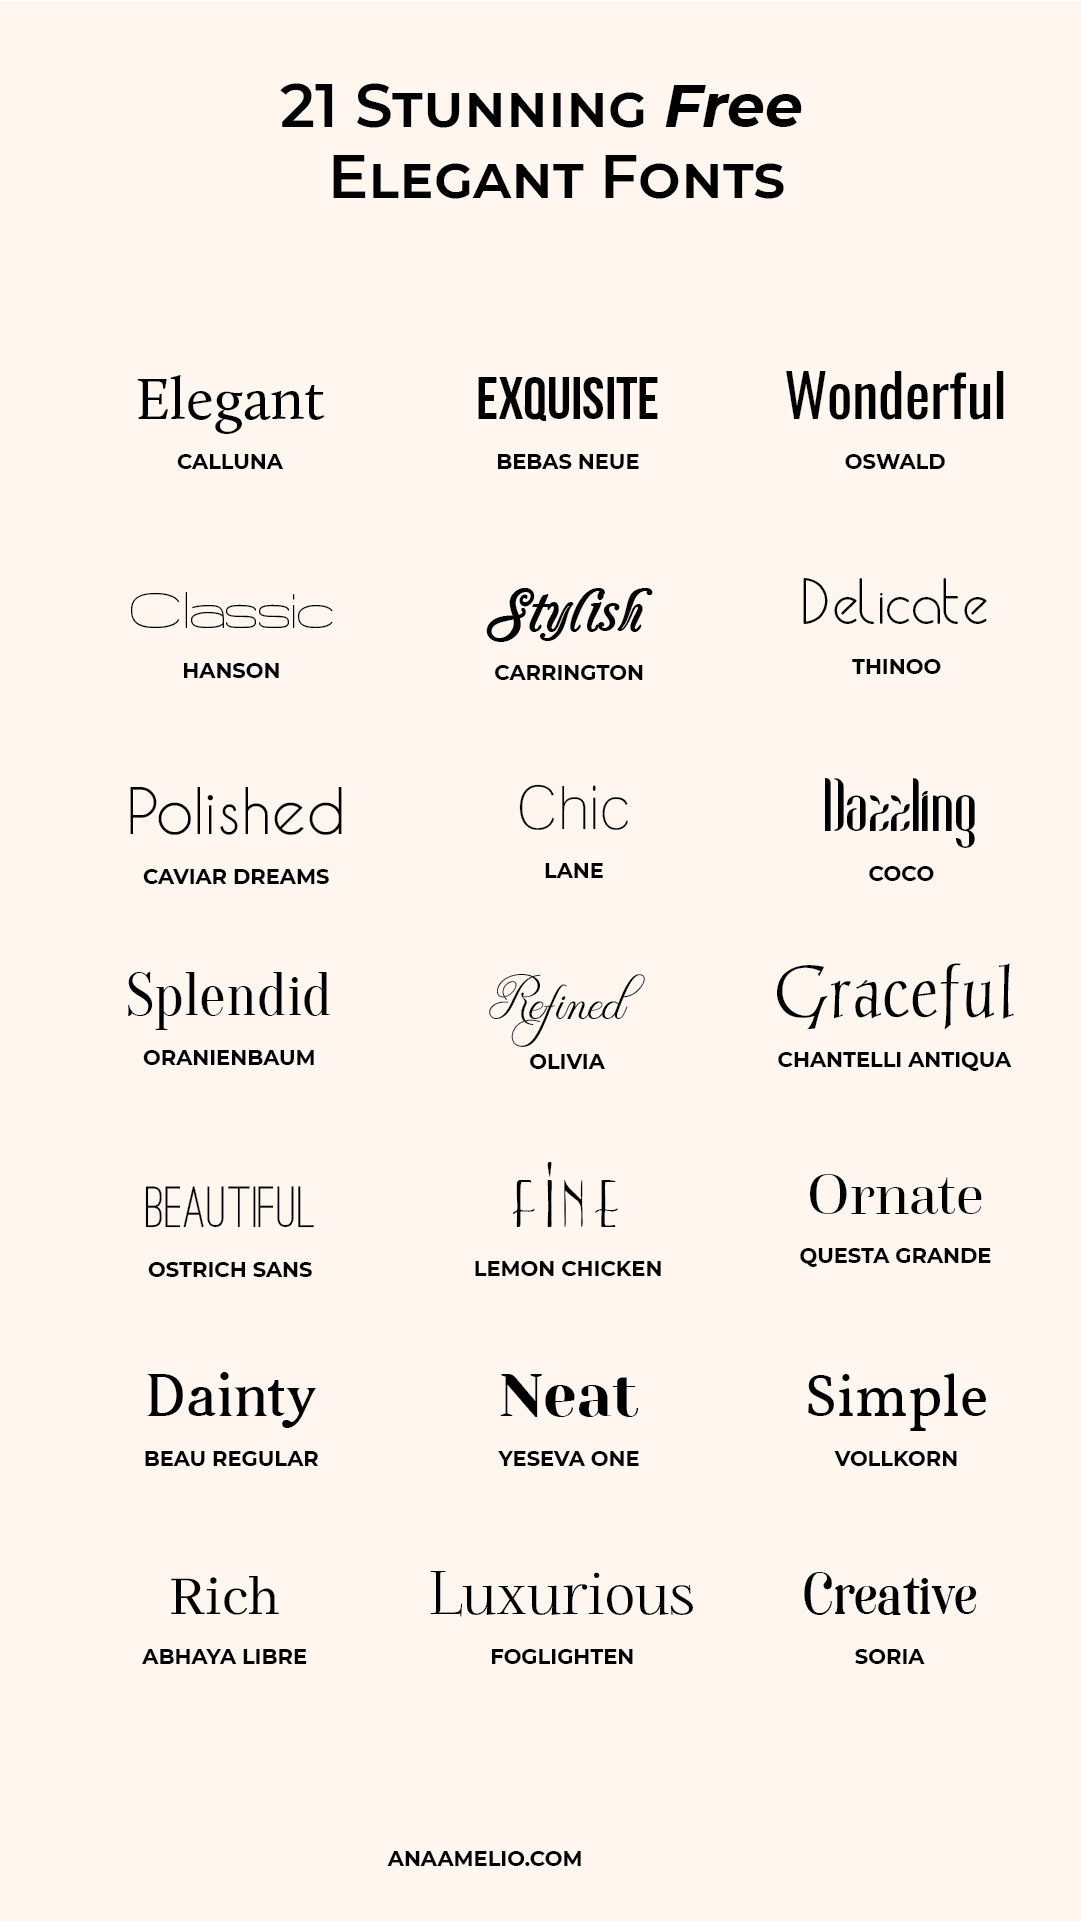 What is elegant font?